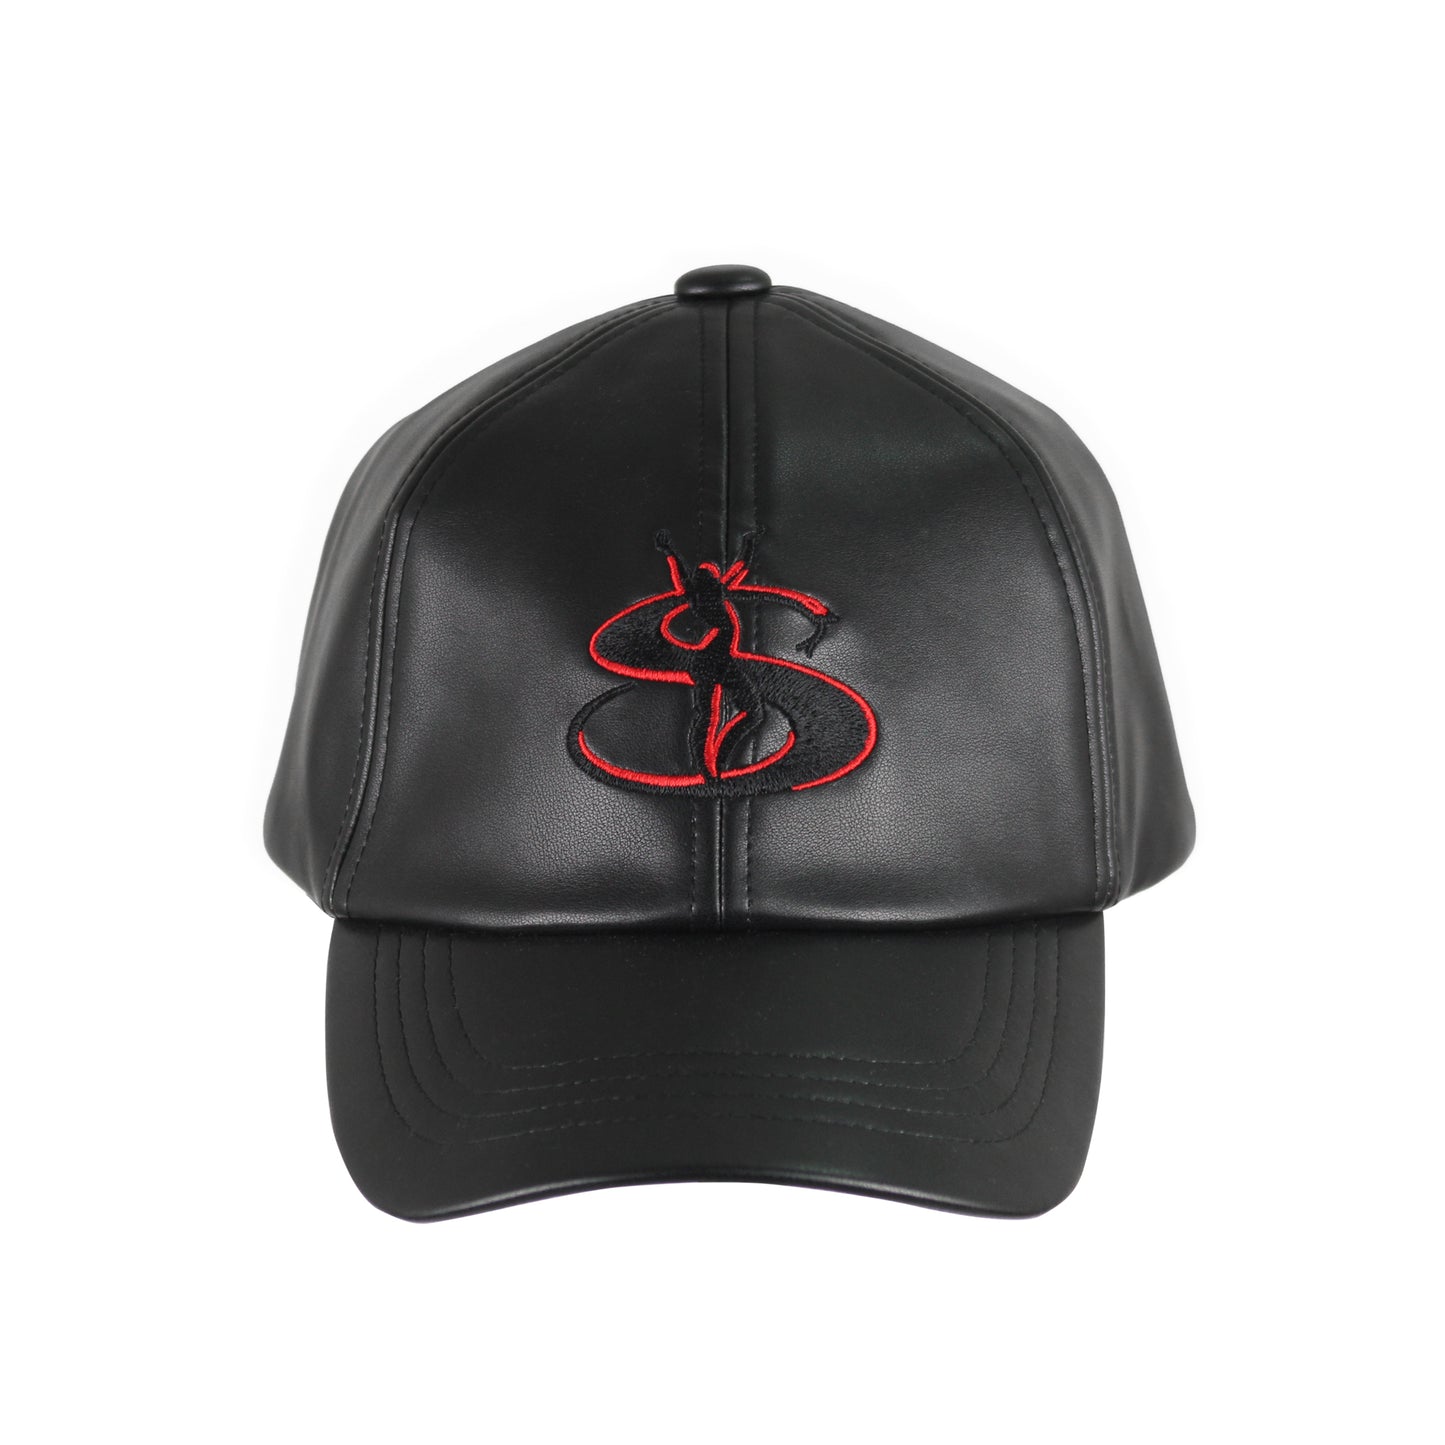 Leather Phantasy Cap (Black)